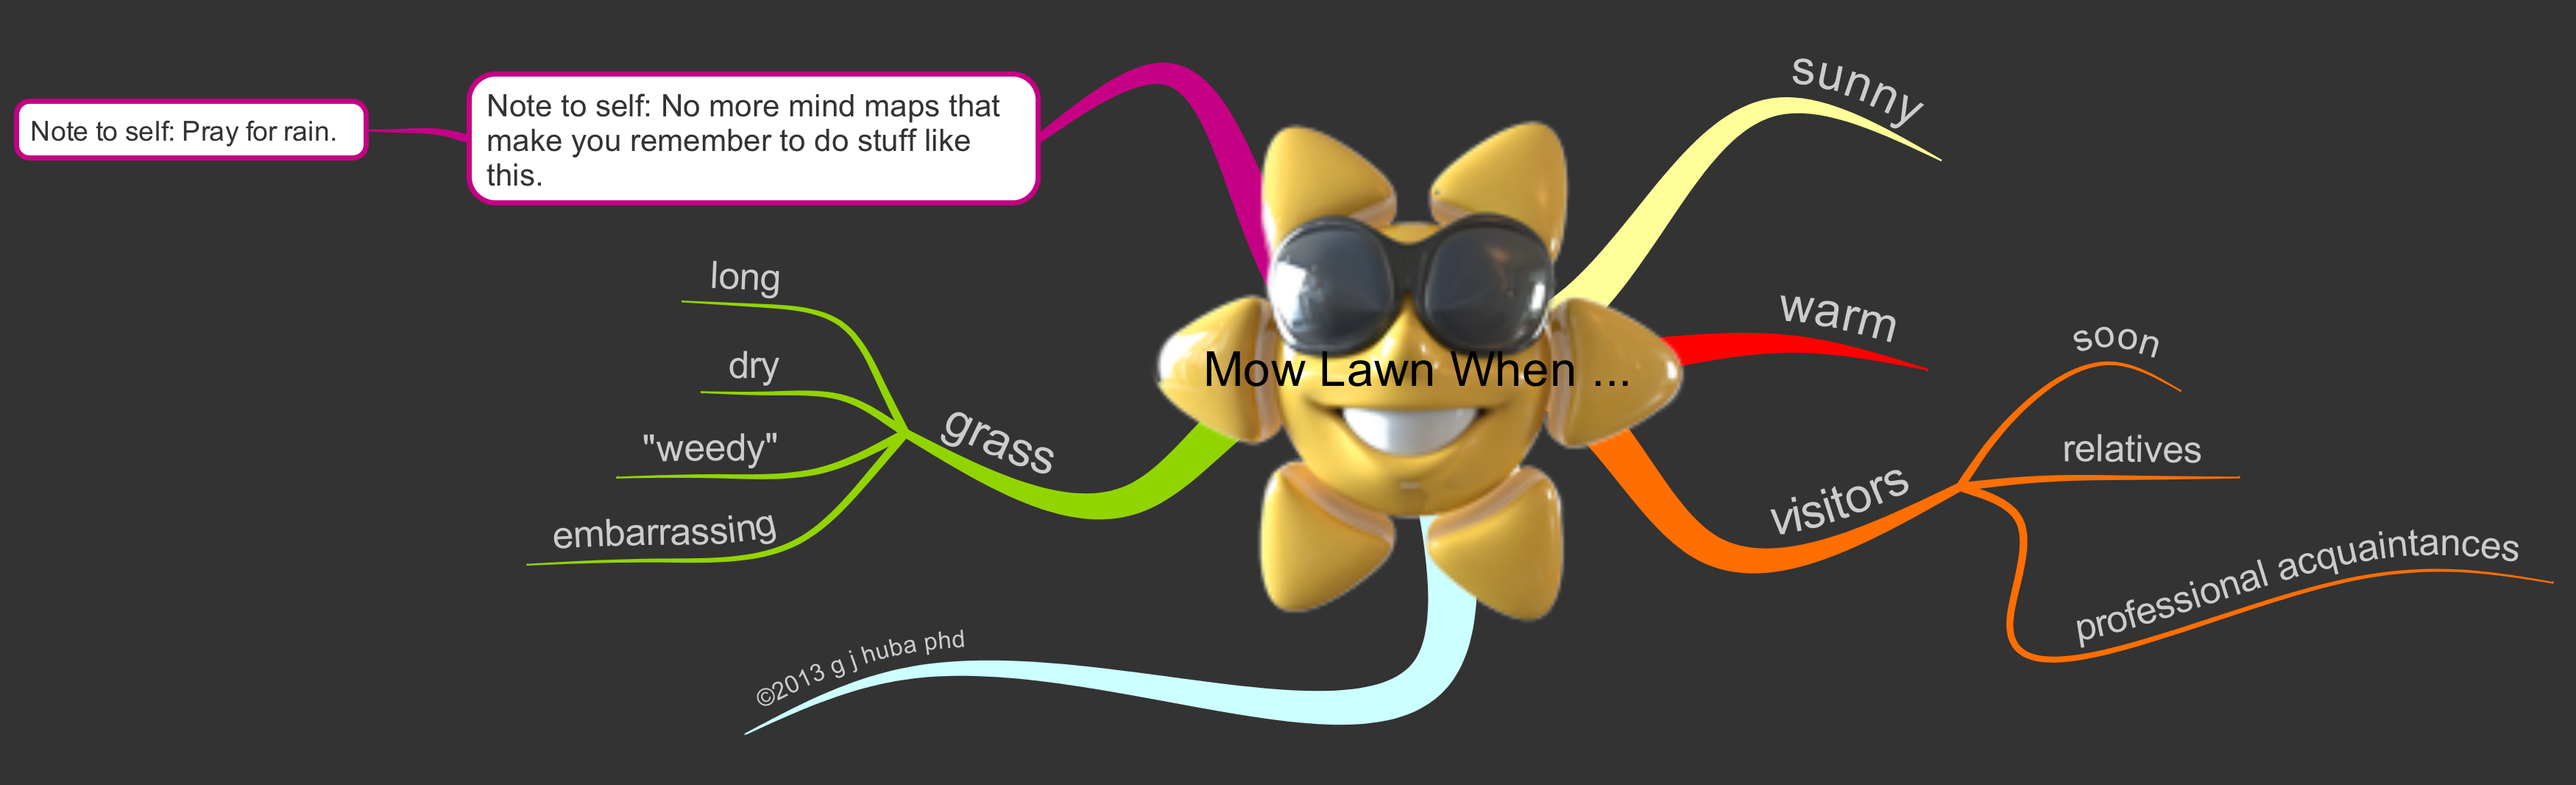 Mow Lawn When ...